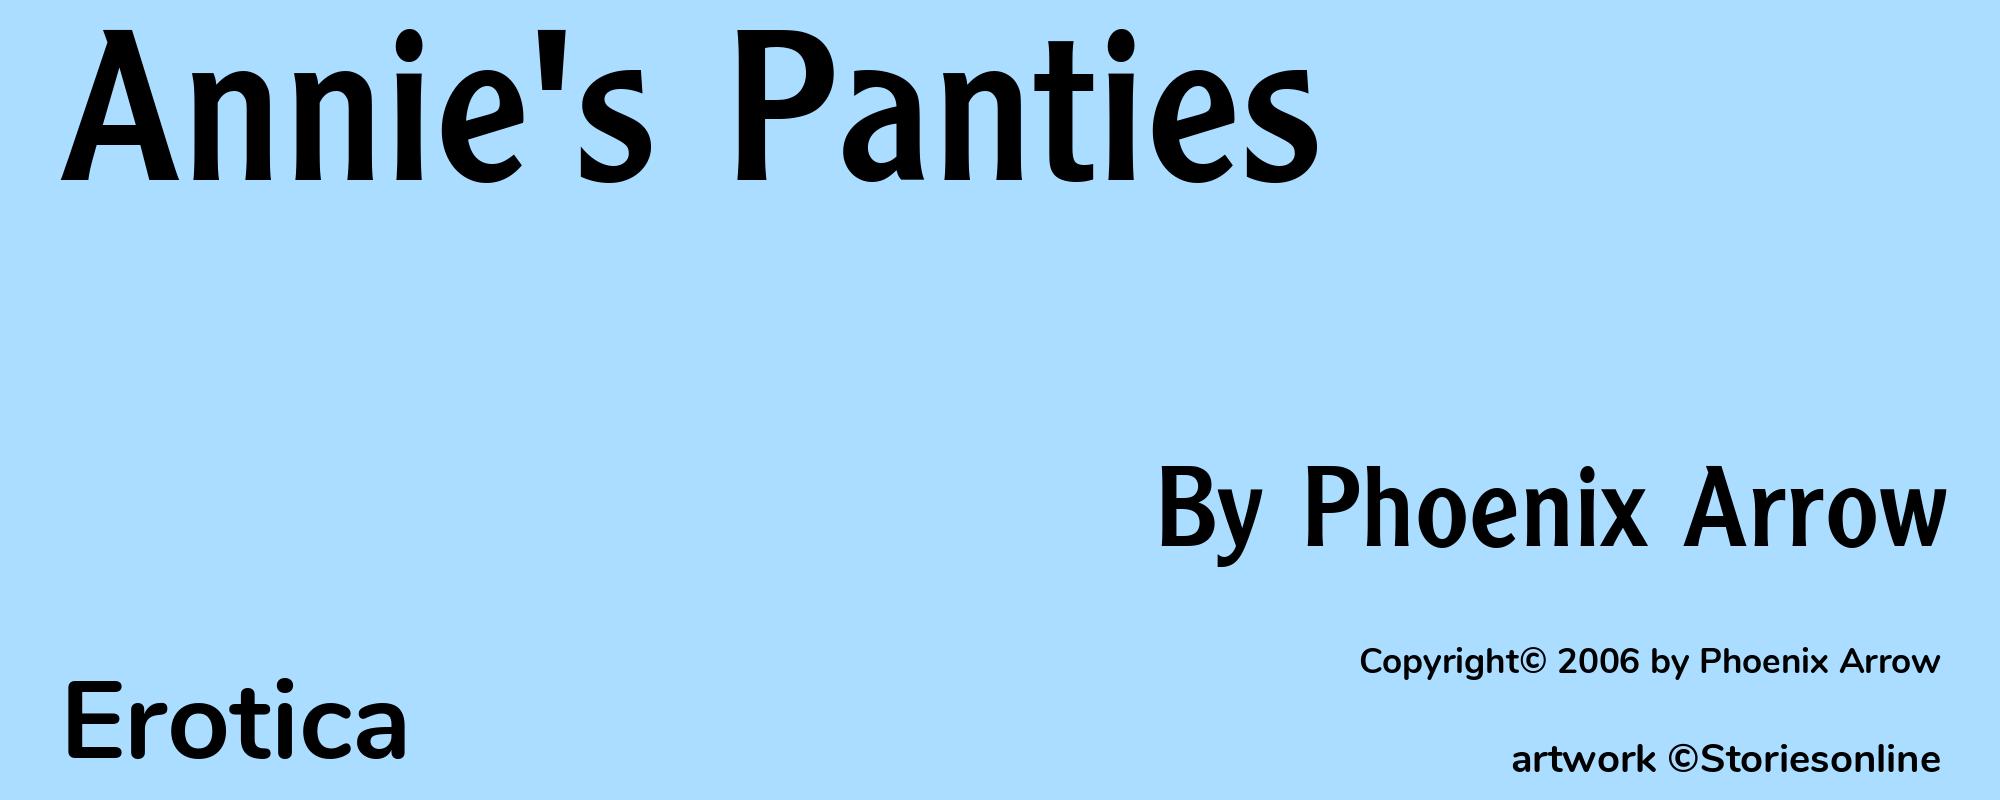 Annie's Panties - Cover